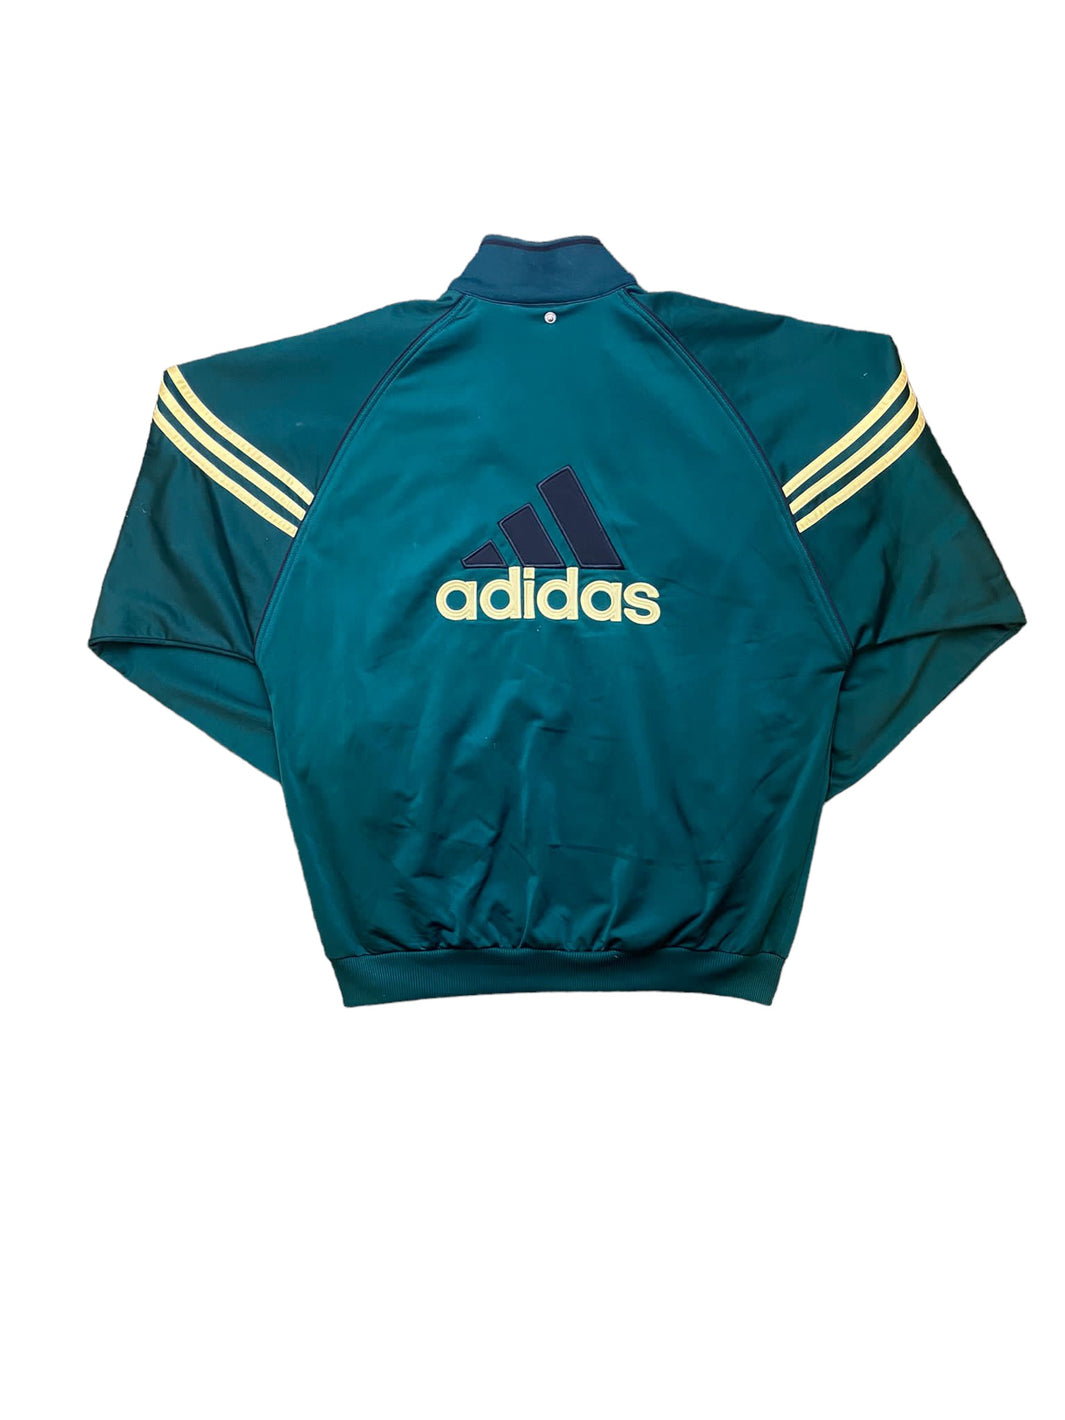 Adidas Track Jacket 90s